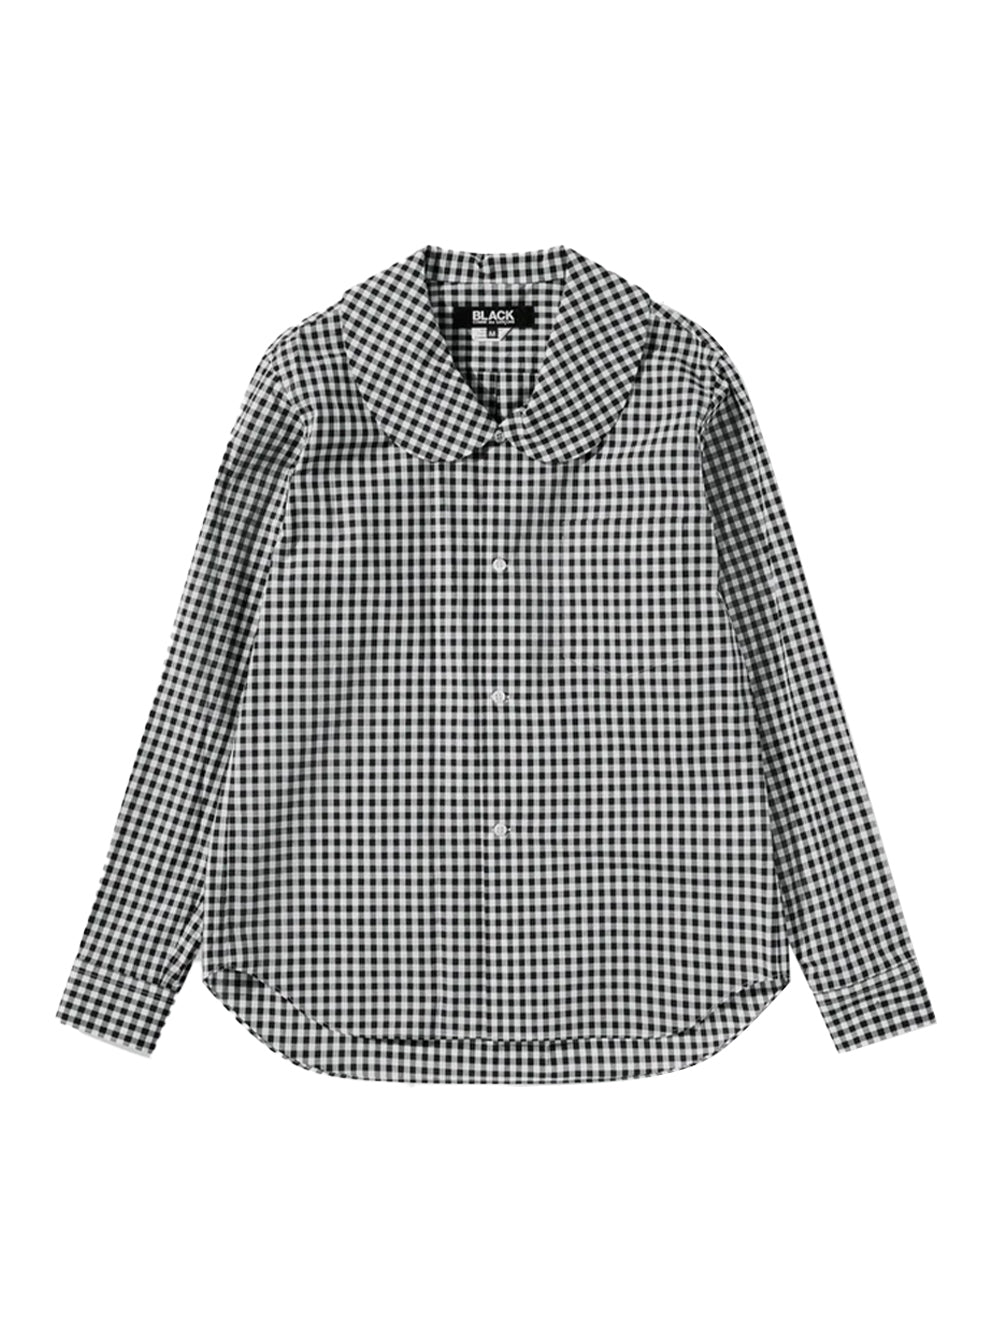 Cotton Broad Gingham Shirt (Black/White)